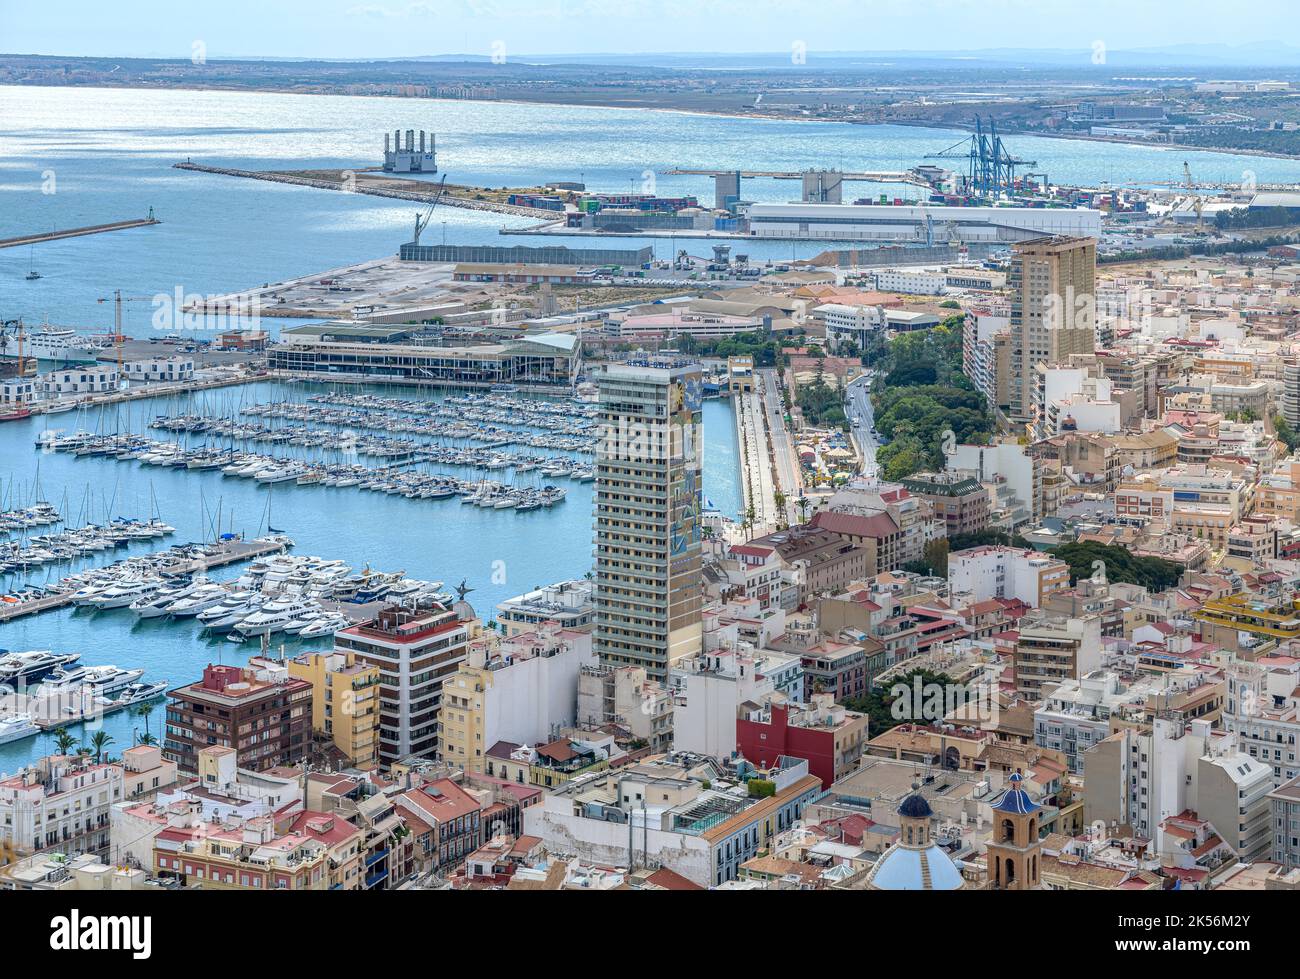 A bird's eye view over the port city of Alicante on the Costa Blanca in southern Spain. Marina shots taken from Castillo de Santa Barbara. Stock Photo